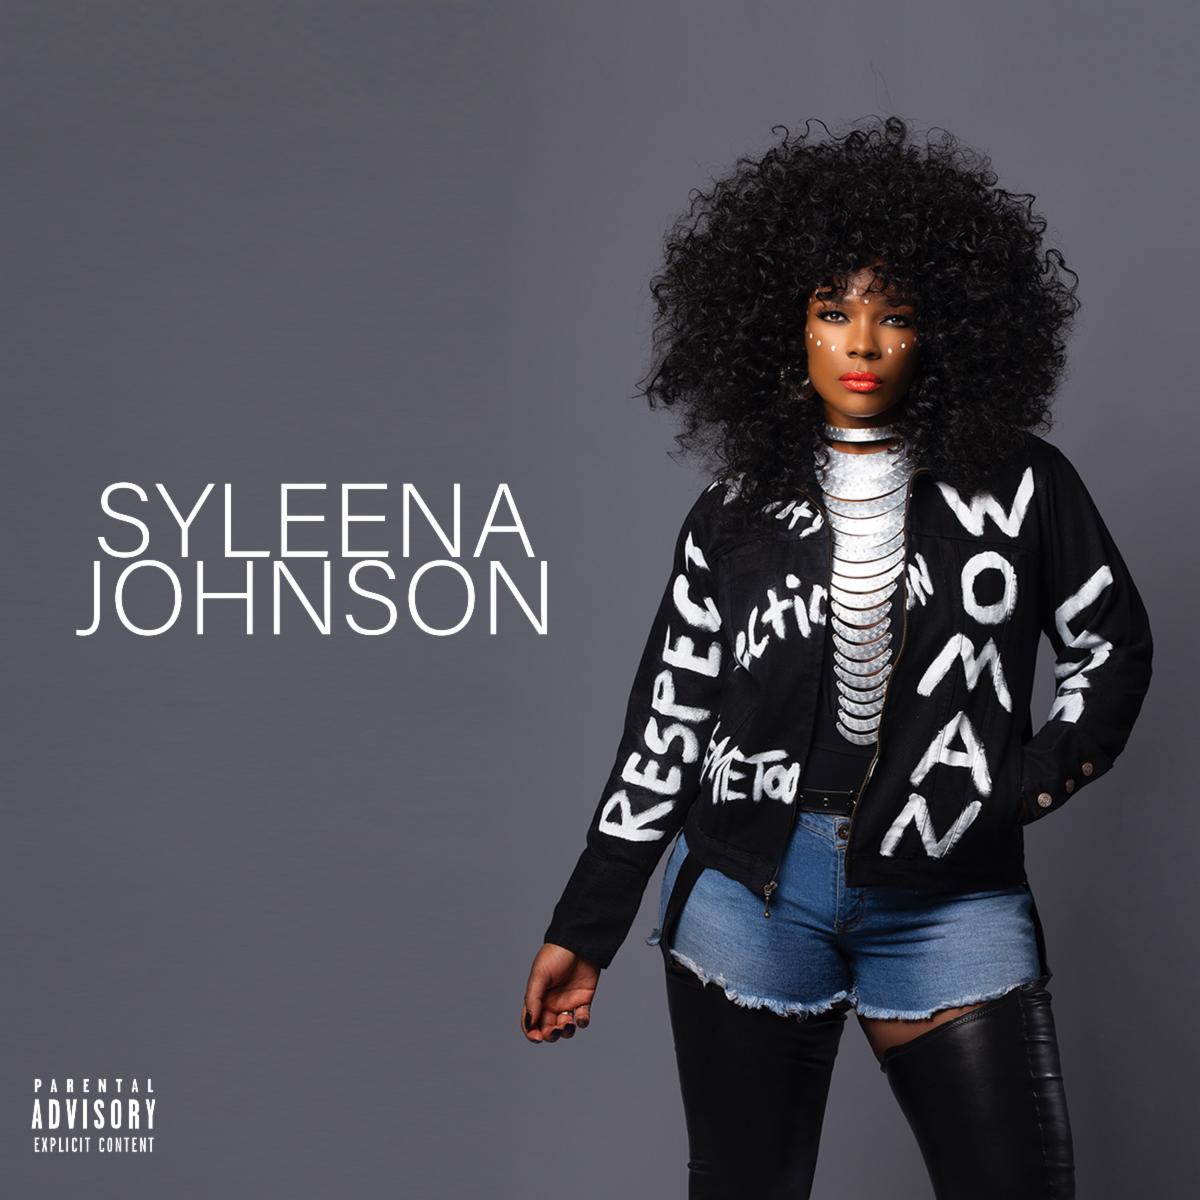 Syleena Johnson Reveals Cover Art & Tracklist for Upcoming Album "Woman"